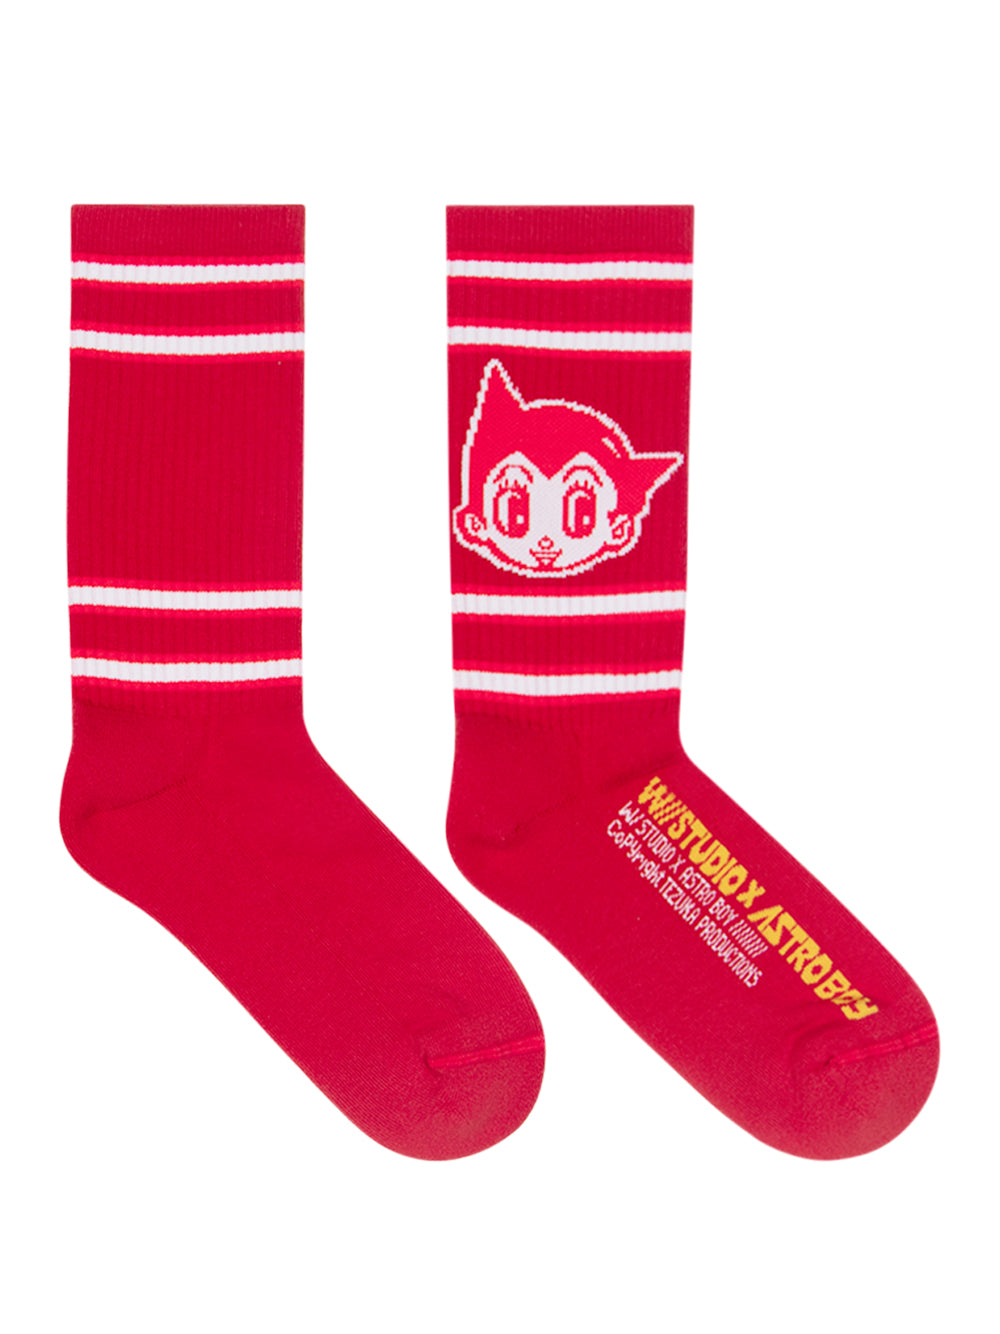 Socks Astro Boy (Red)